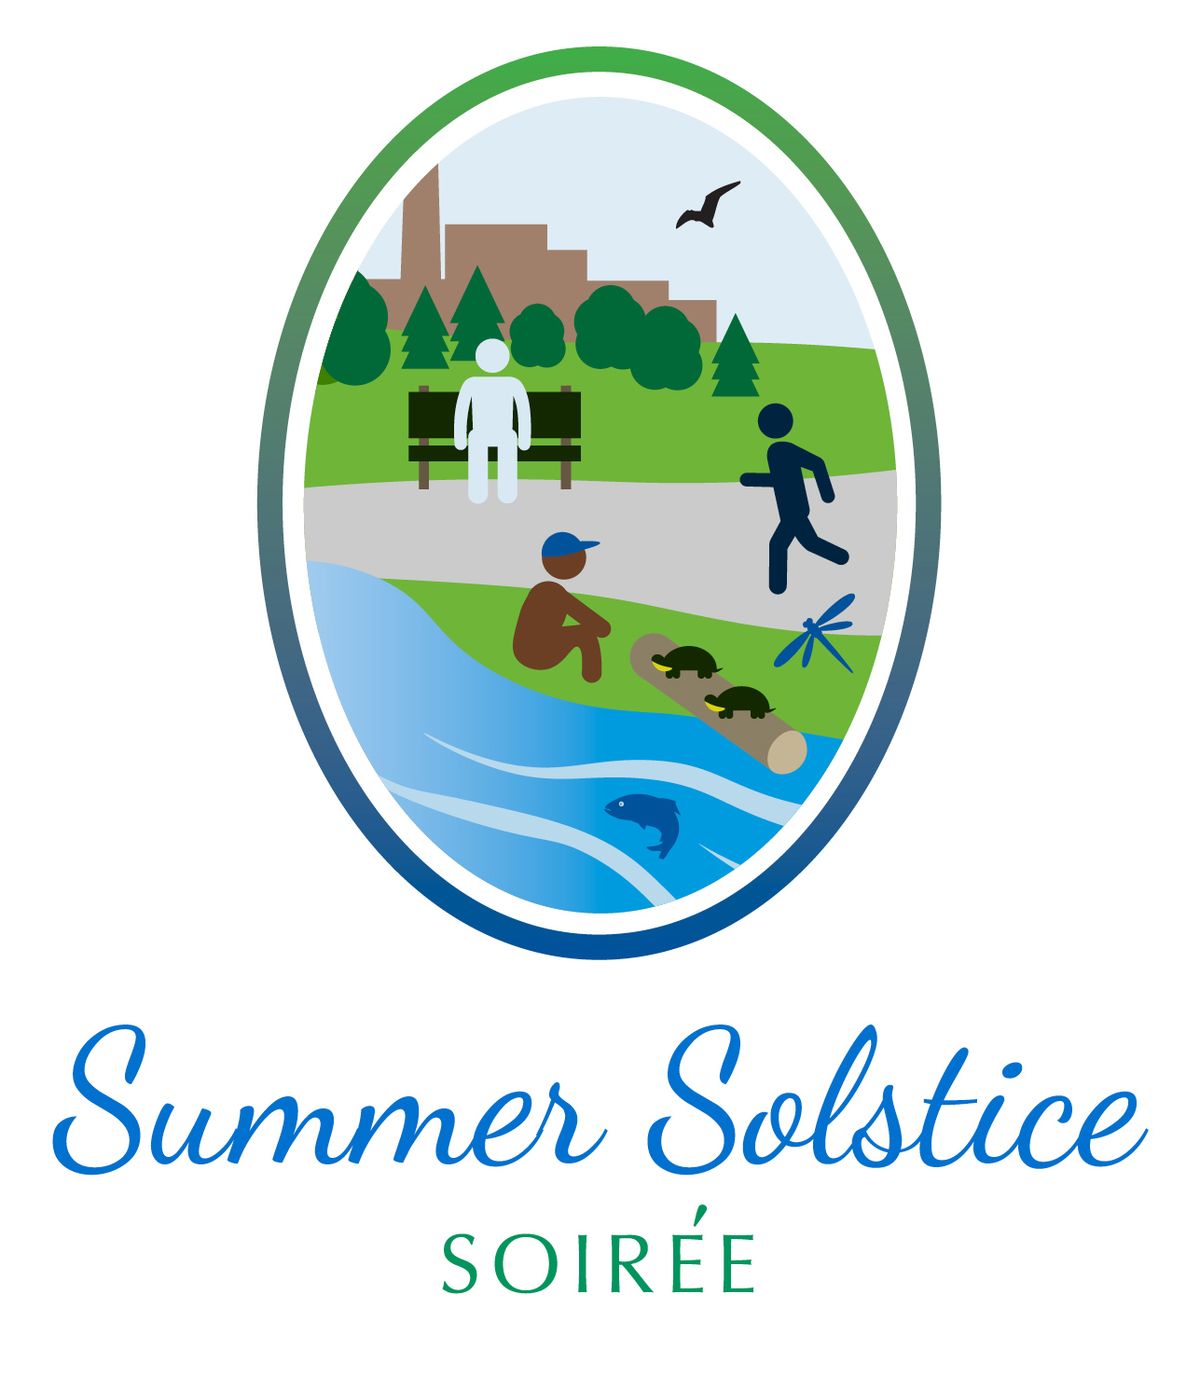 Summer Solstice Soiree